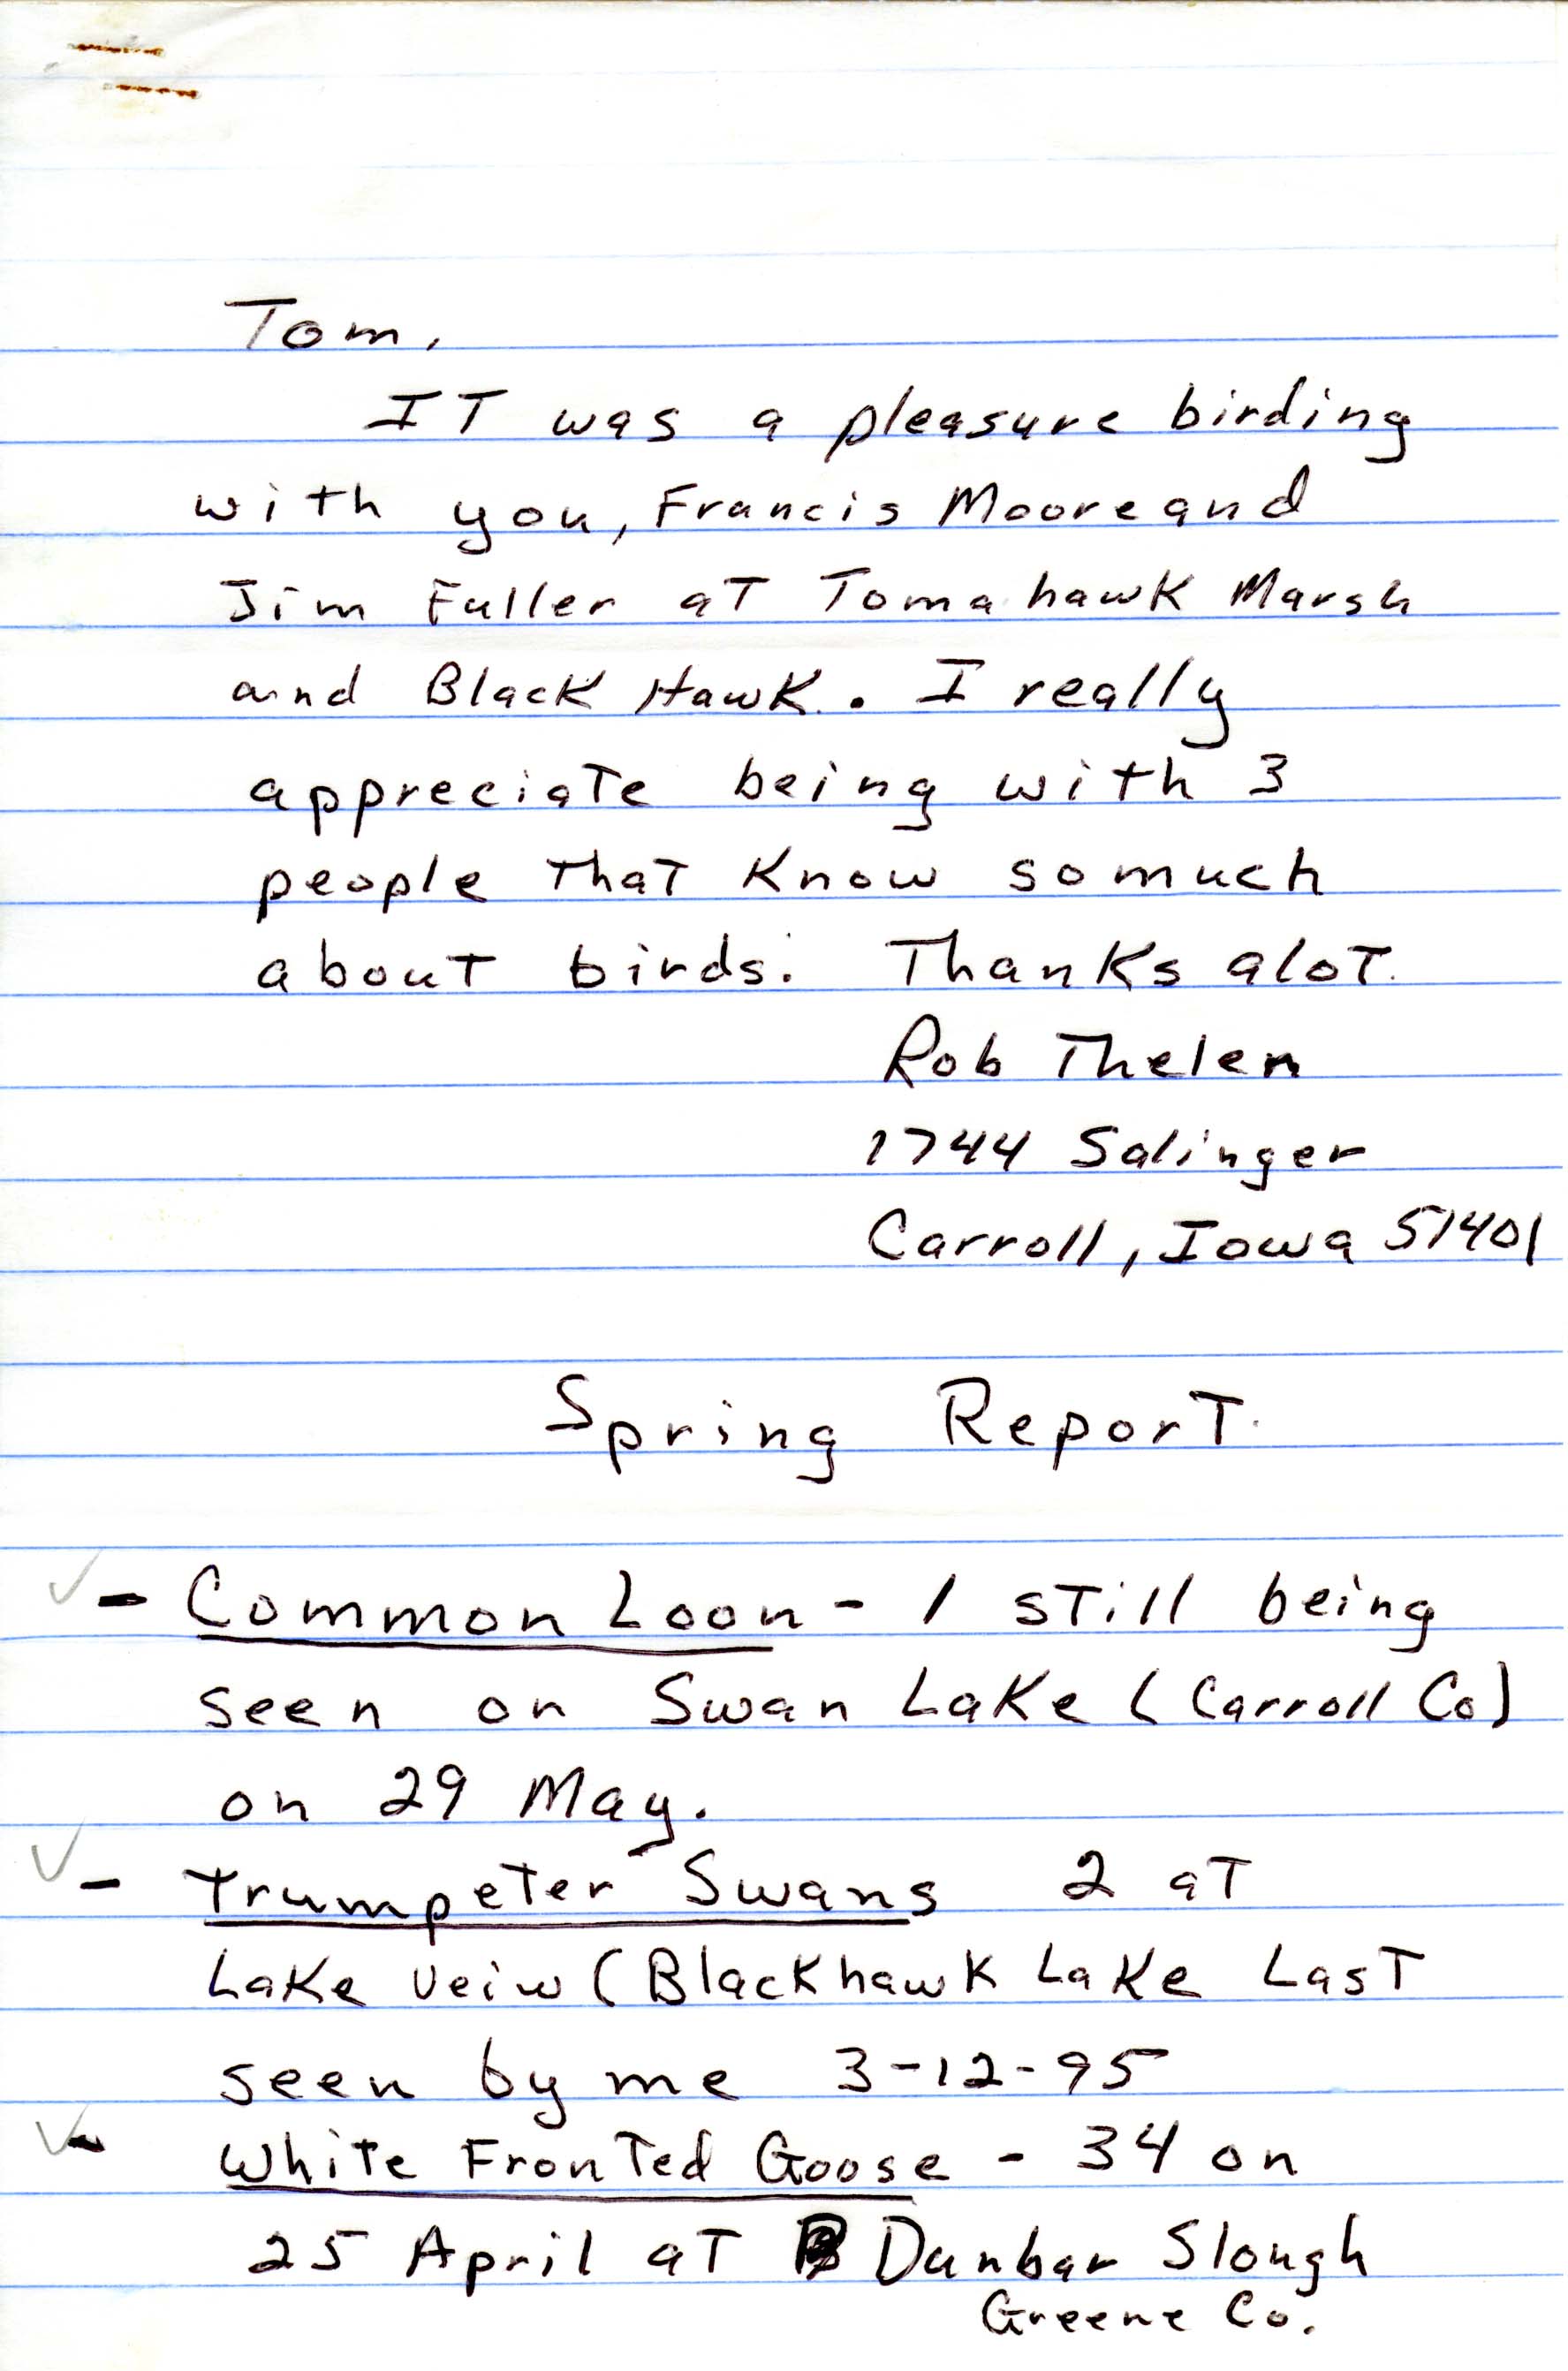 Rob Thelen letter to Thomas Kent regarding spring report, spring 1995